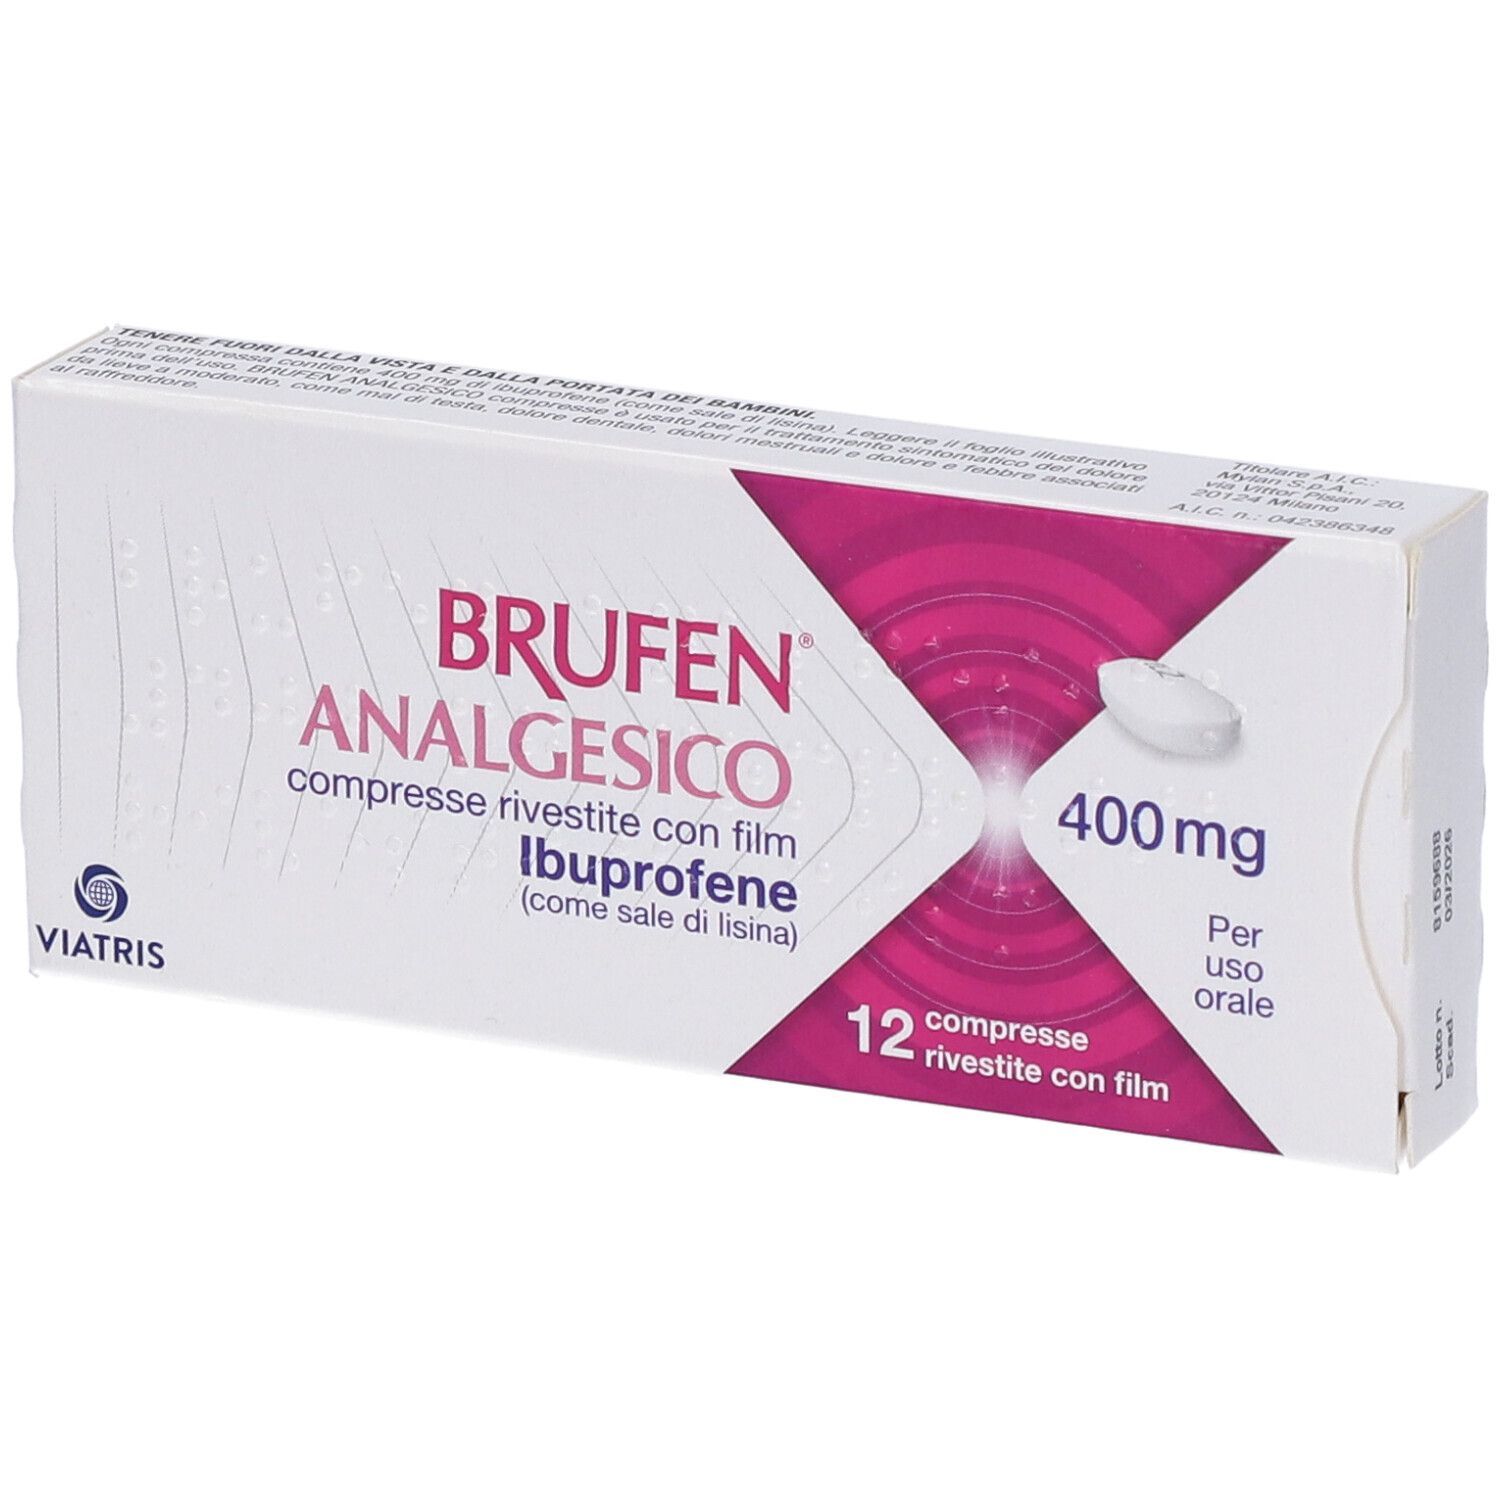 BRUFEN® Analgesico 400 mg